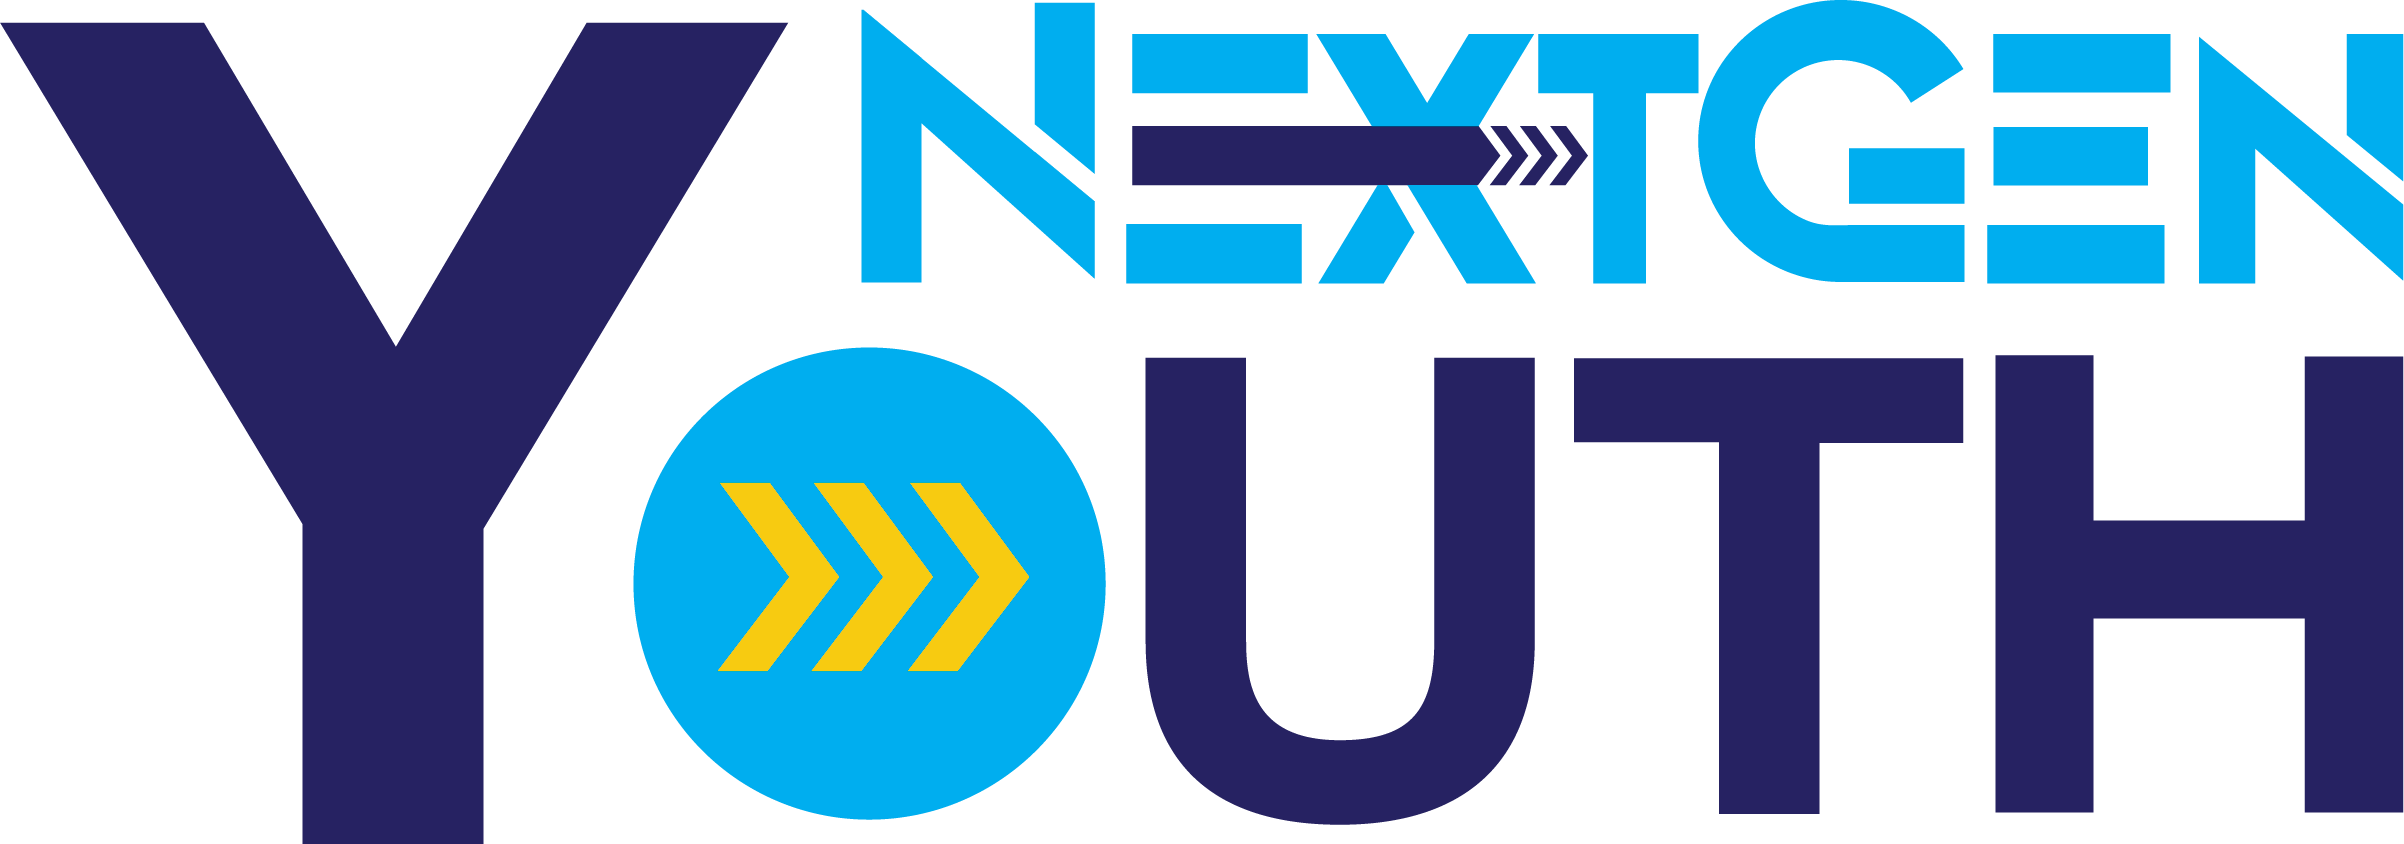 NextGen_Baby_Blue_Youth_Logo.png